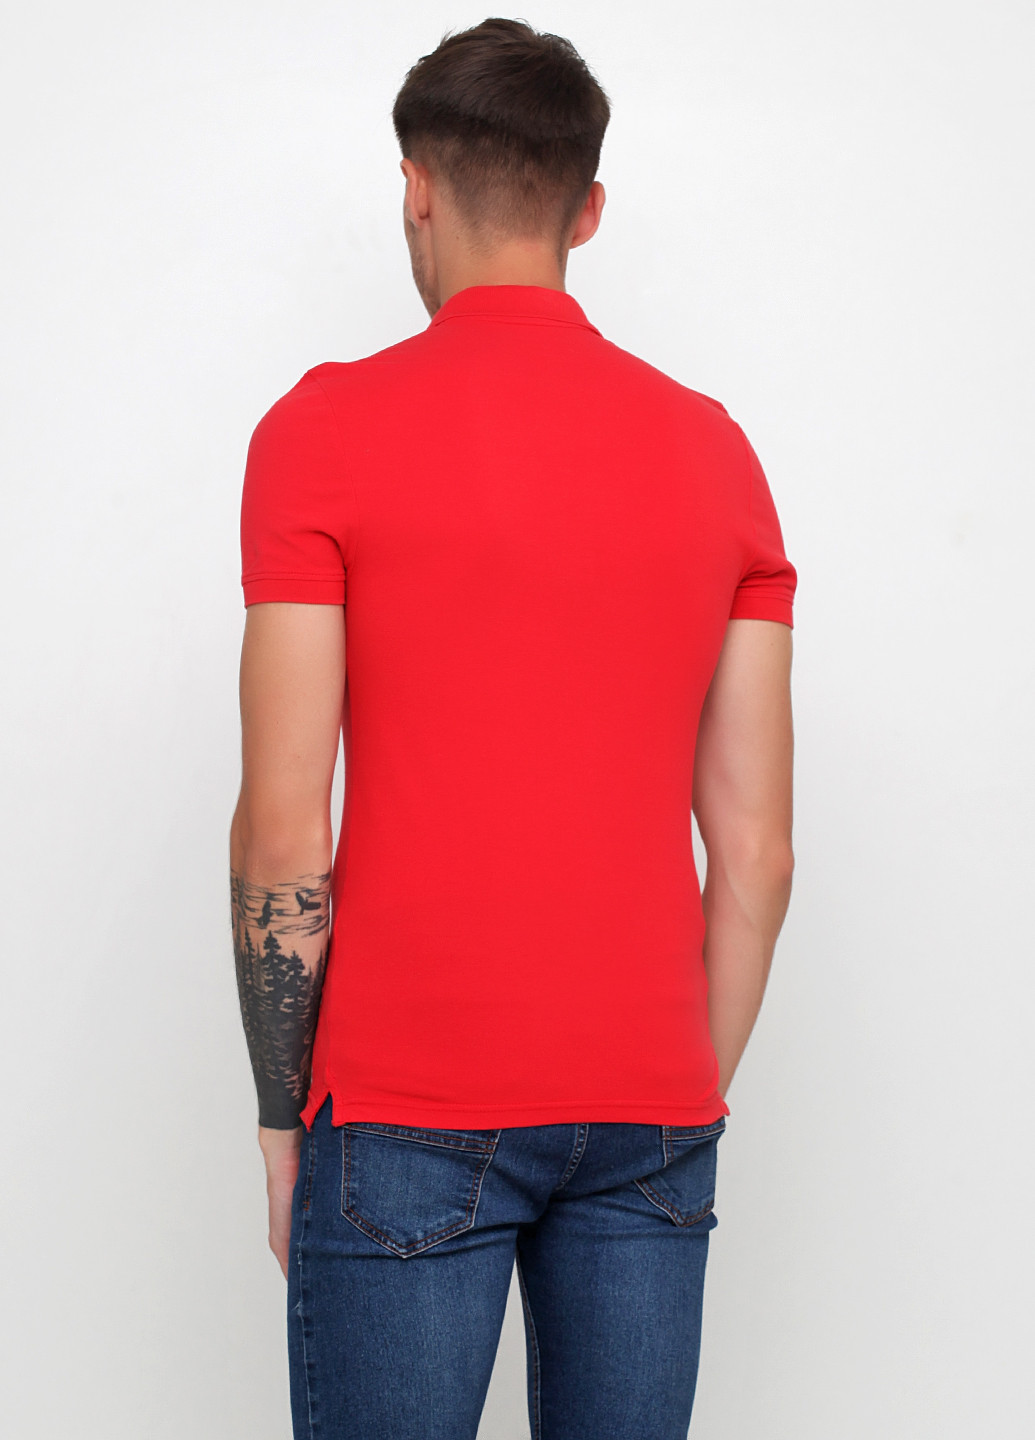 Красная футболка-поло для мужчин H&M однотонная